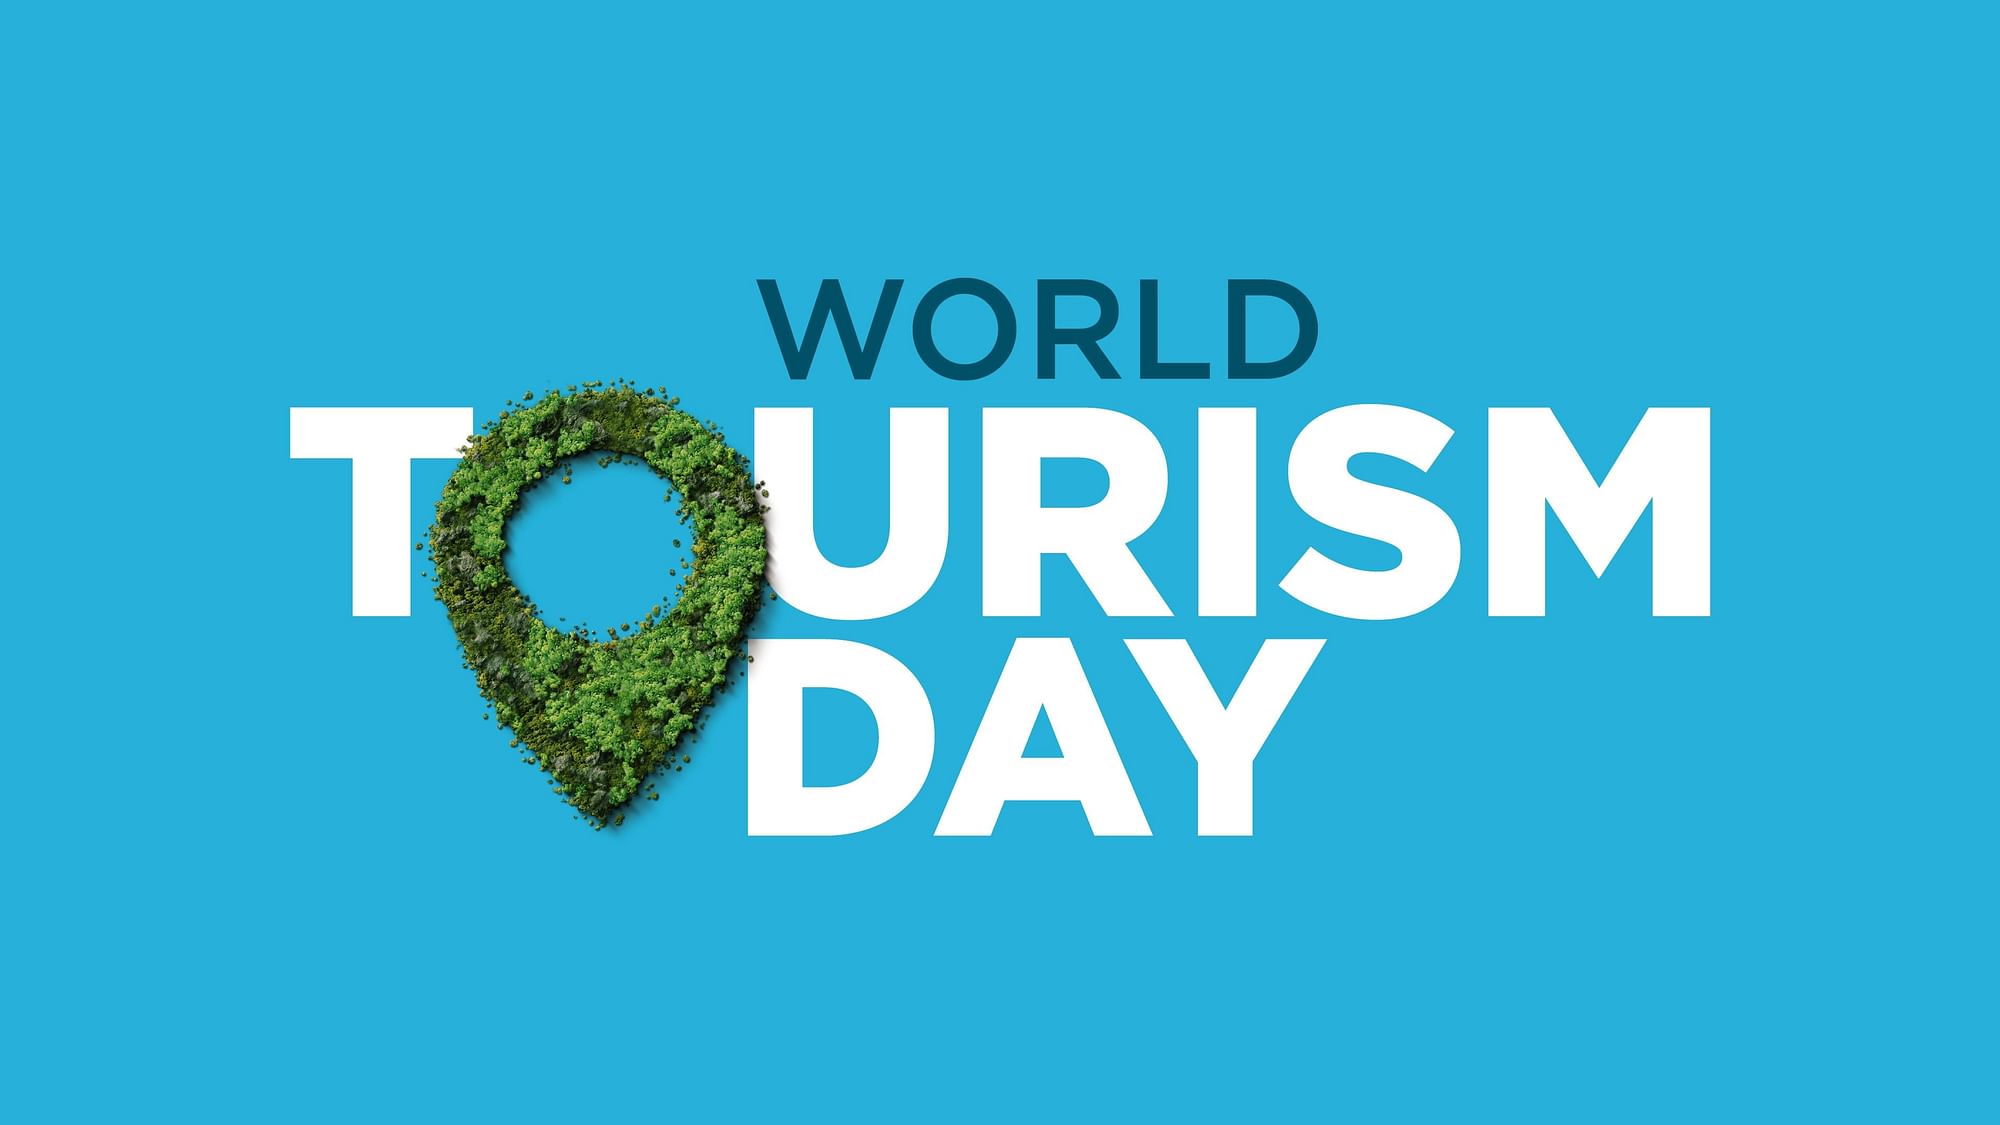 world tourism day celebrated on